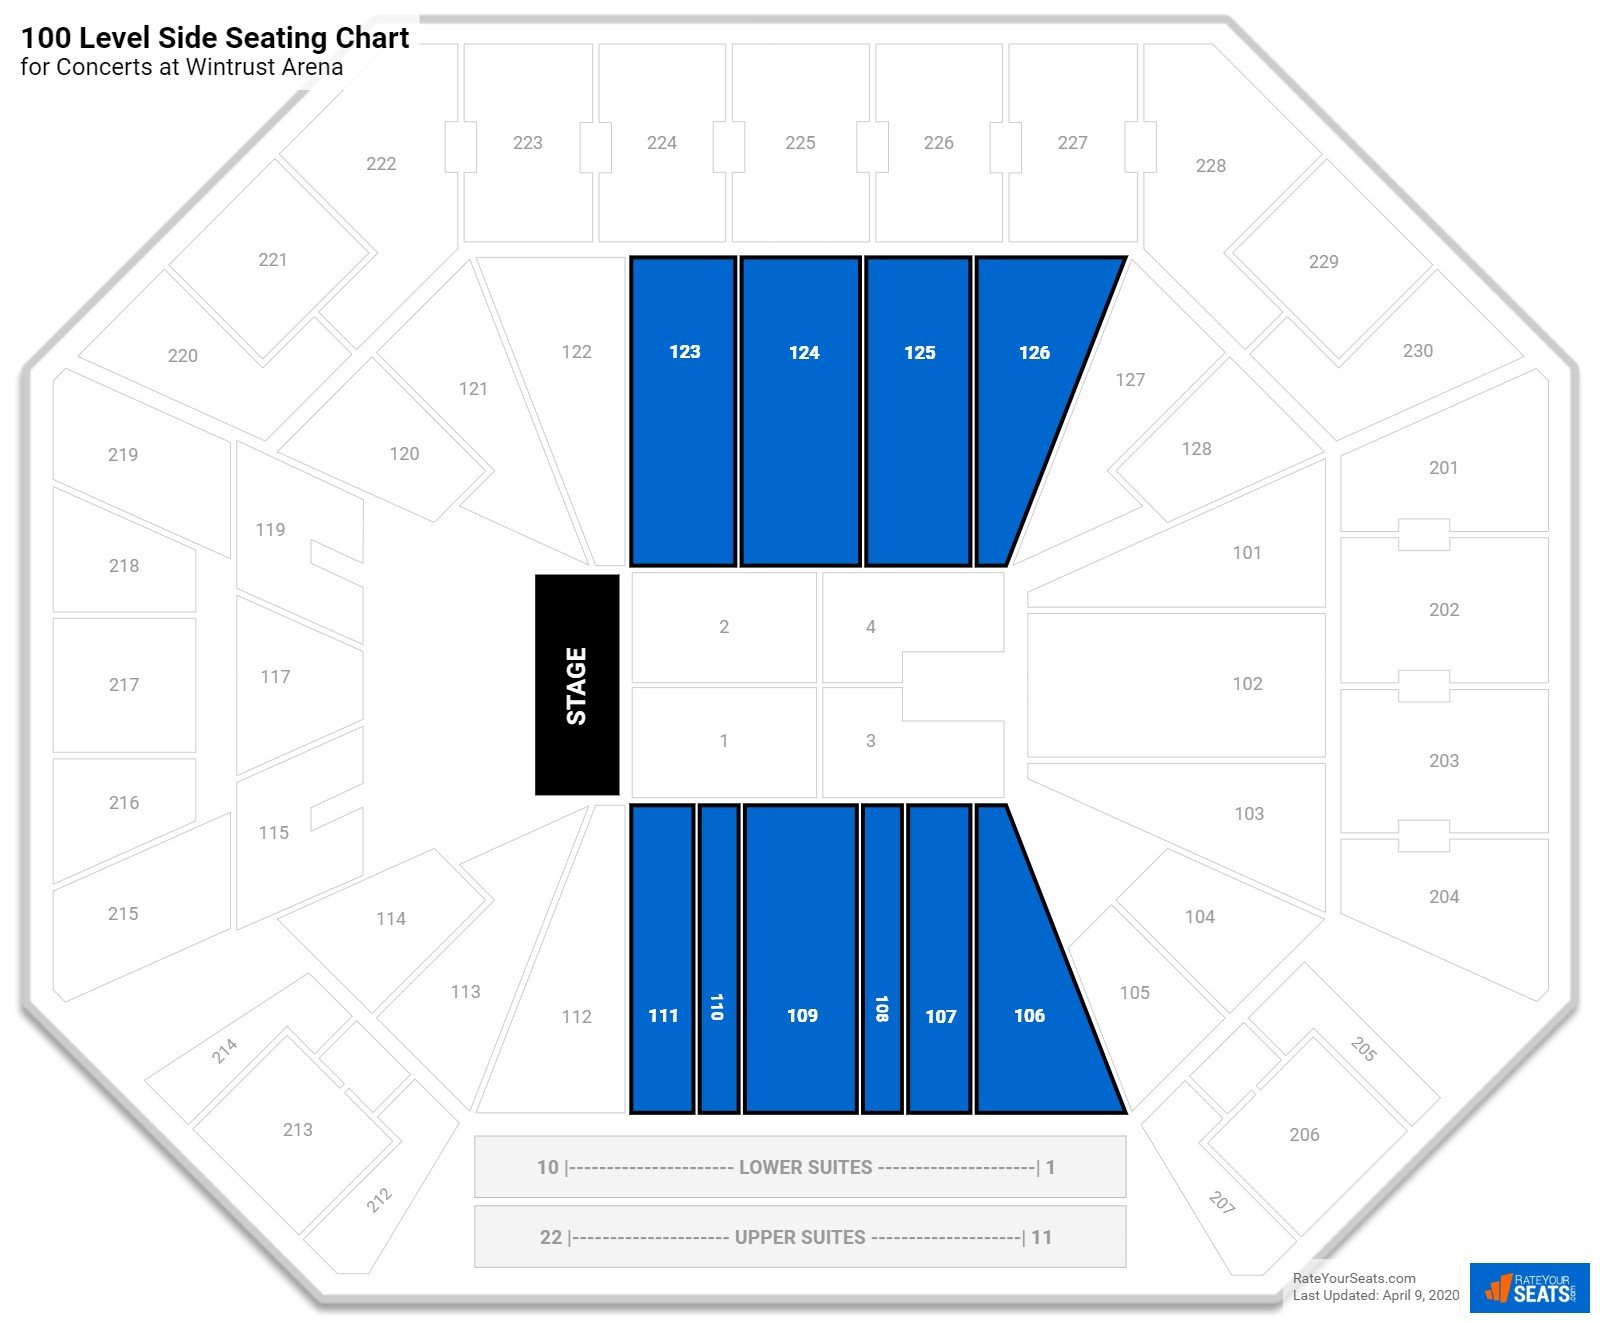 Wintrust Arena 200 Level Side - Concert Seating ...